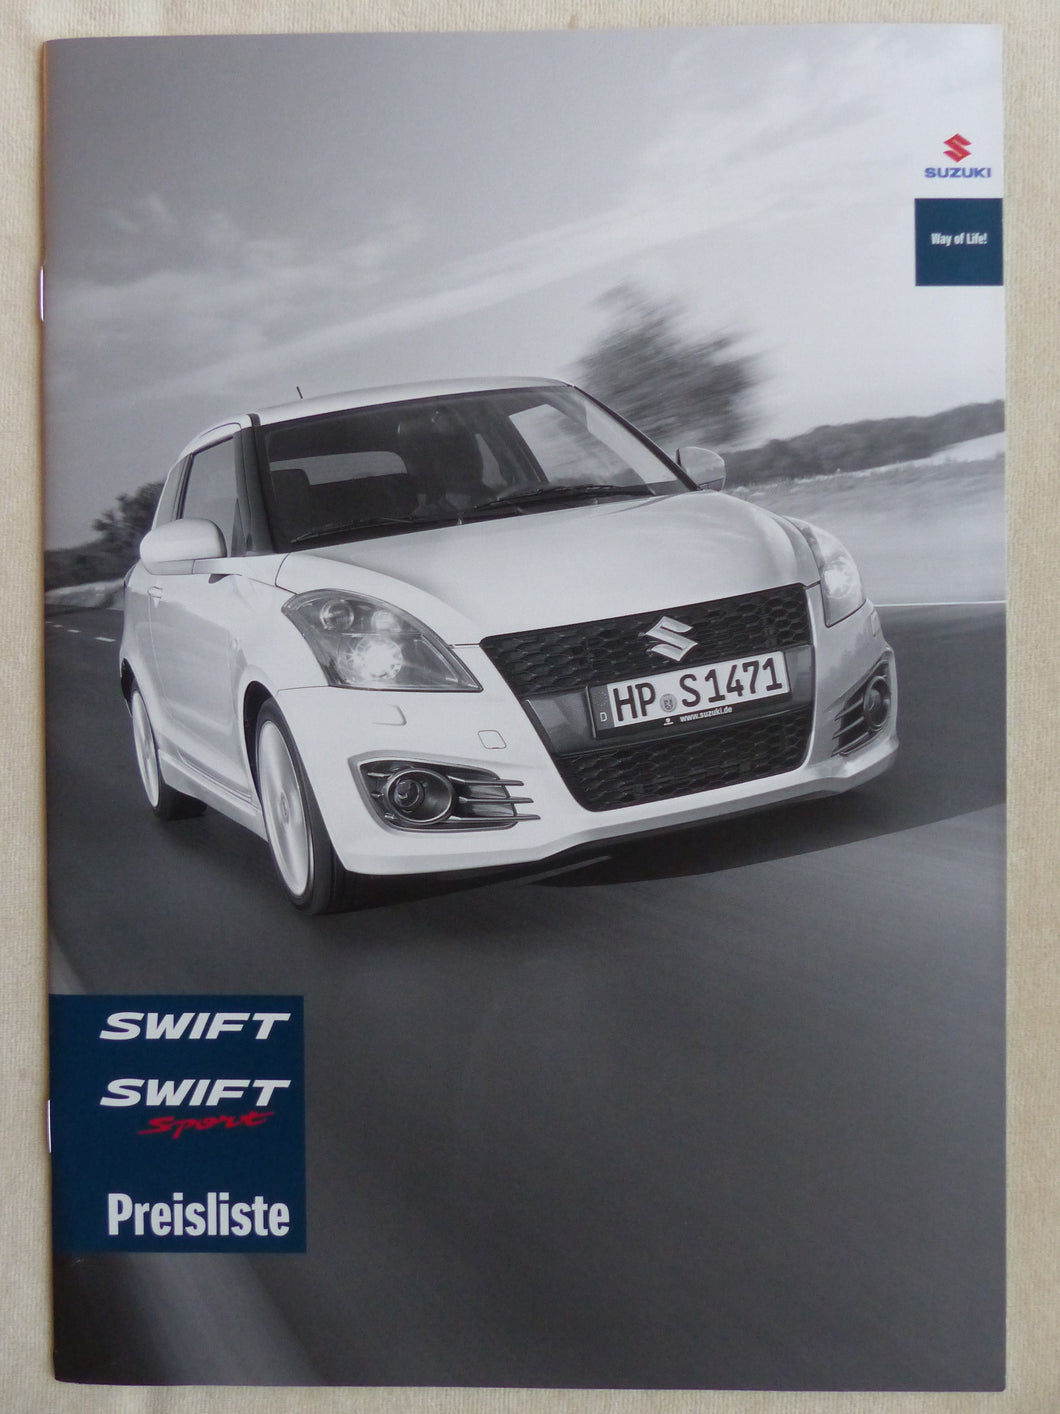 Suzuki Swift Sport - Preisliste MJ 2016 - Prospekt Brochure 01.2016